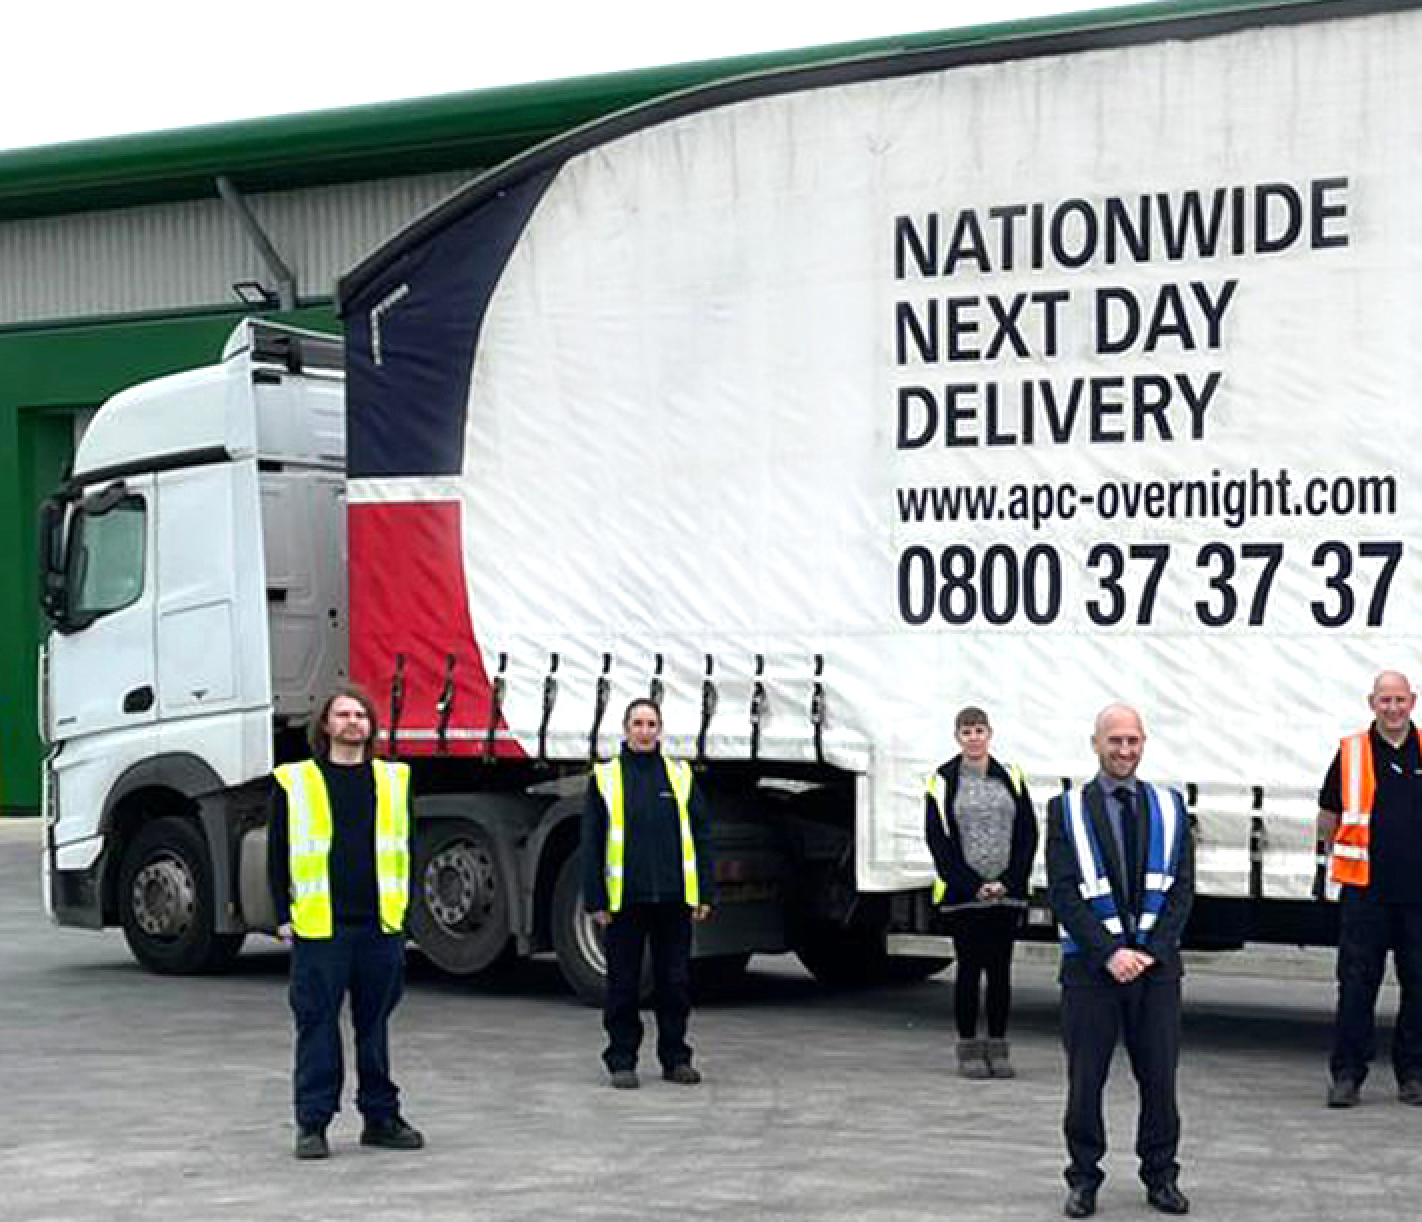 Courier Logistics, opens new 29,000 sq. ft. parcel facility